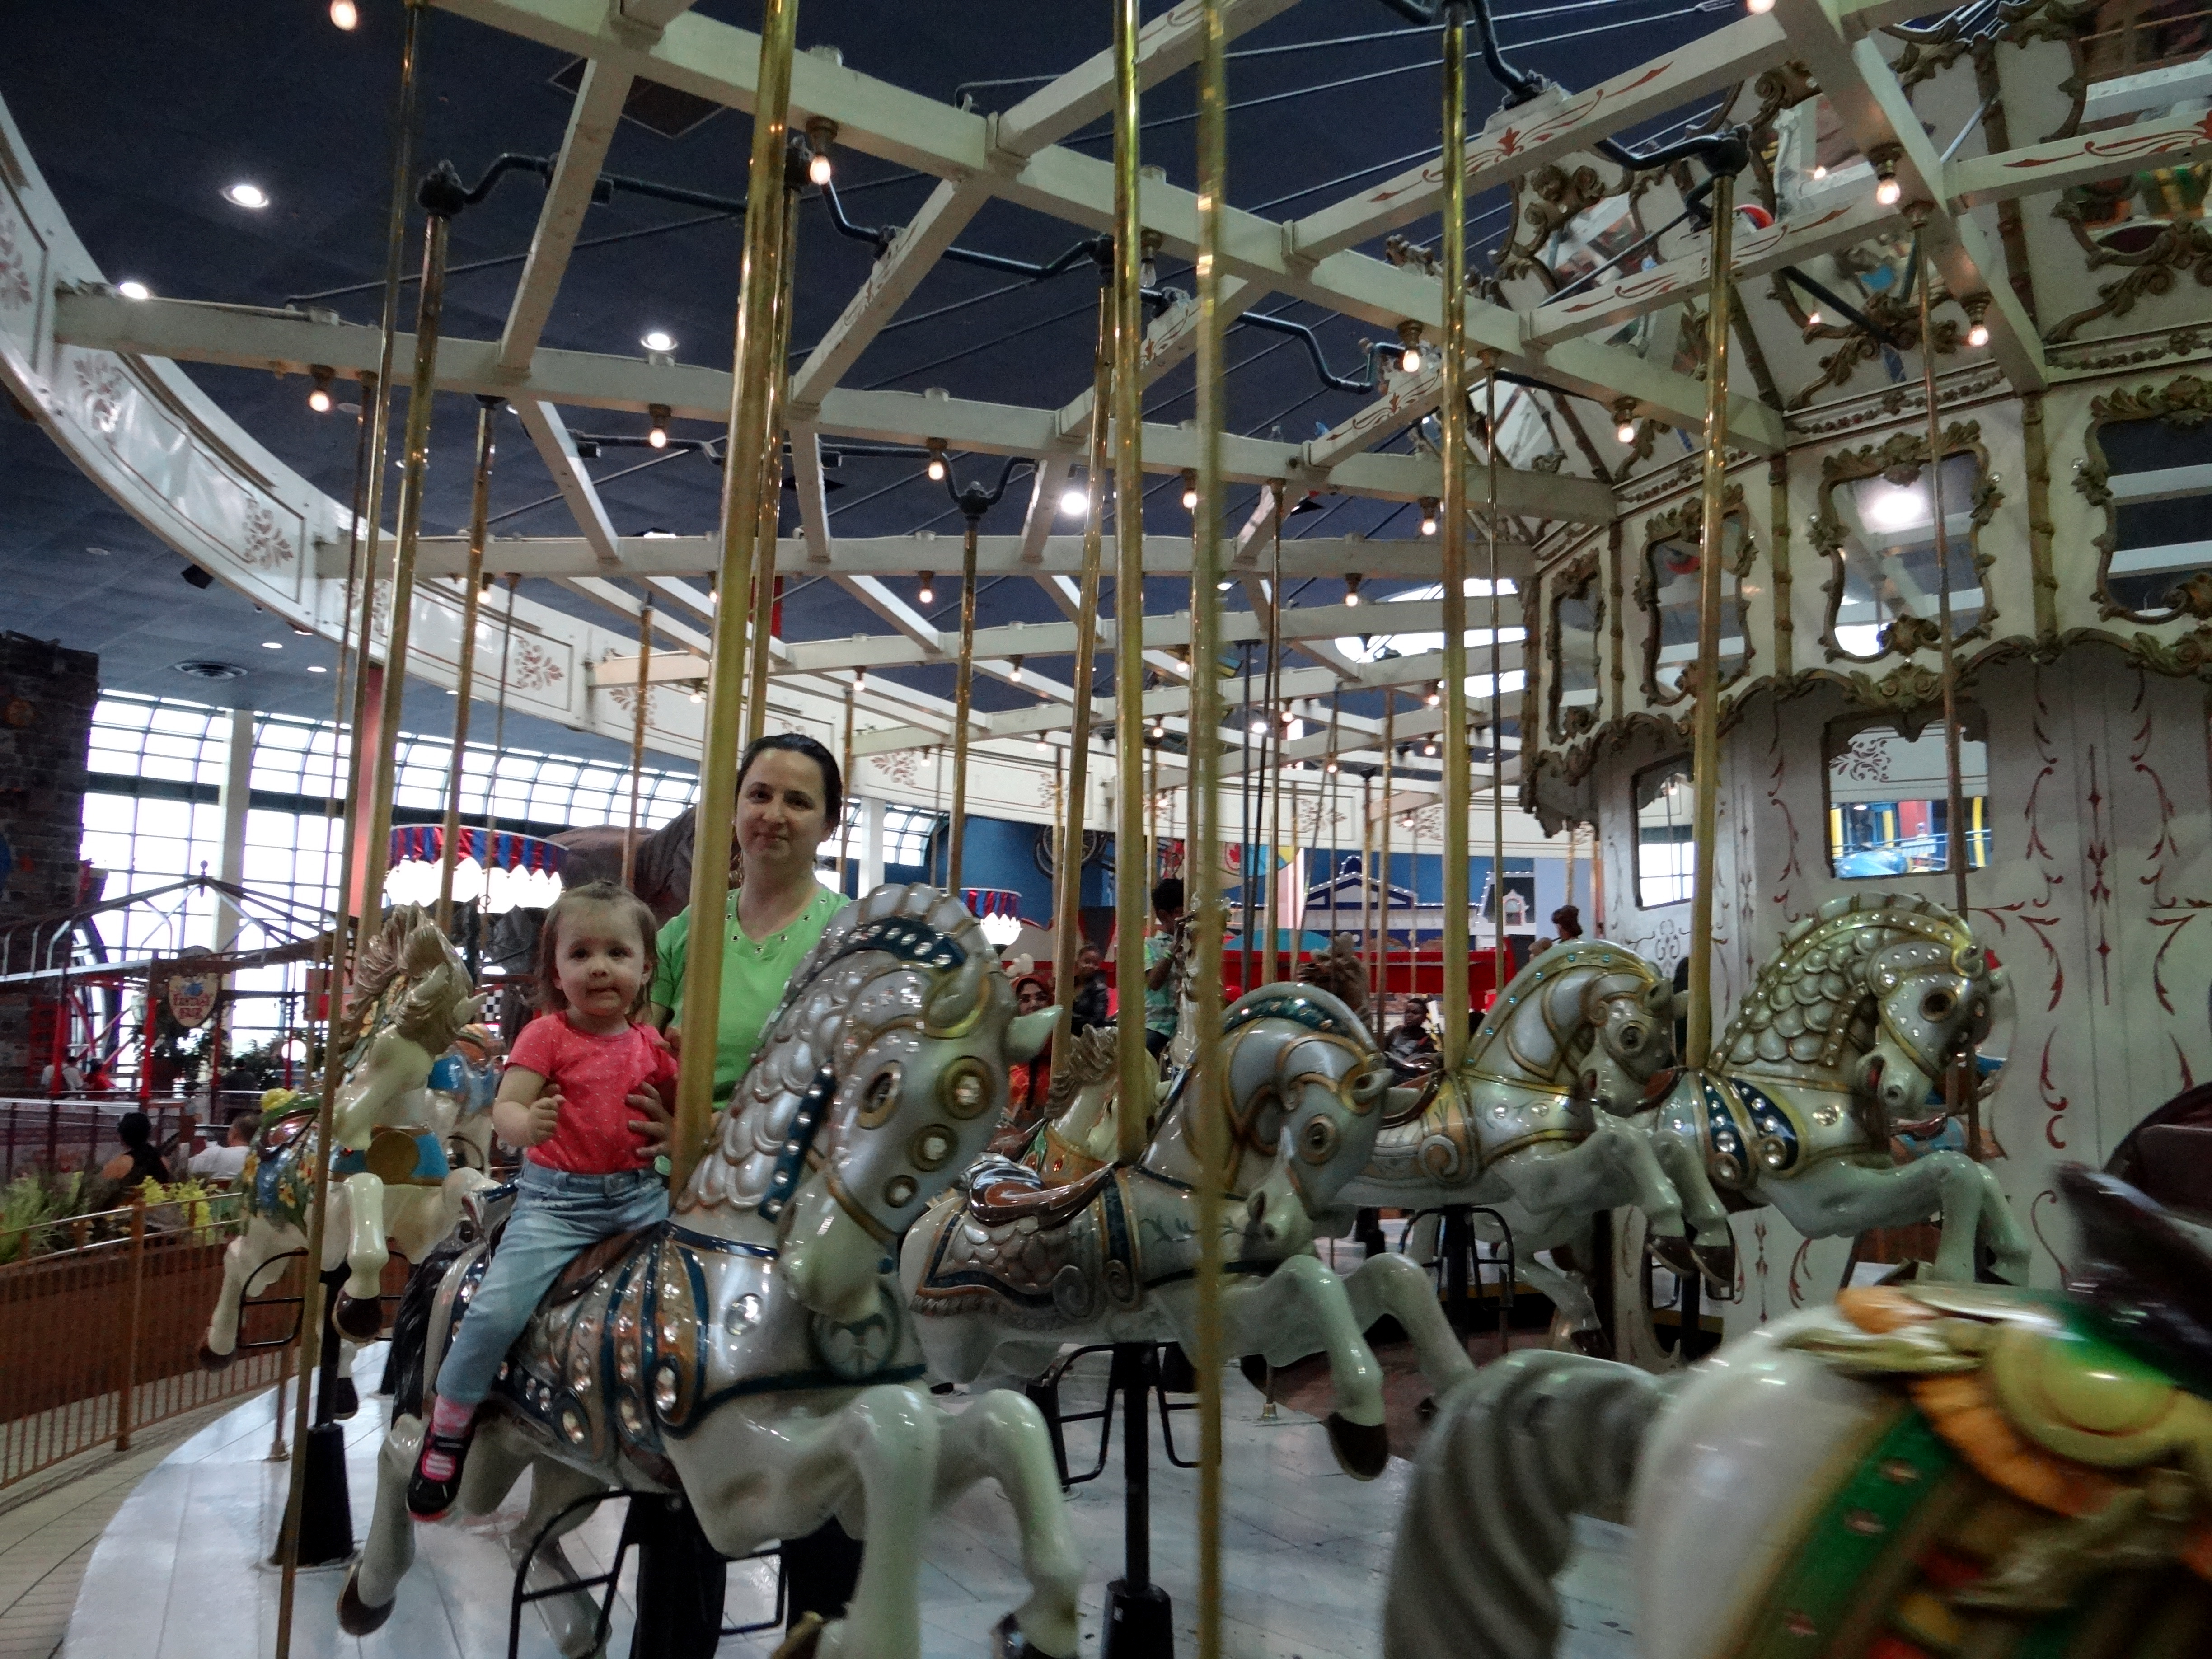 Toddler on a carousel horse at the Fantasy Fair